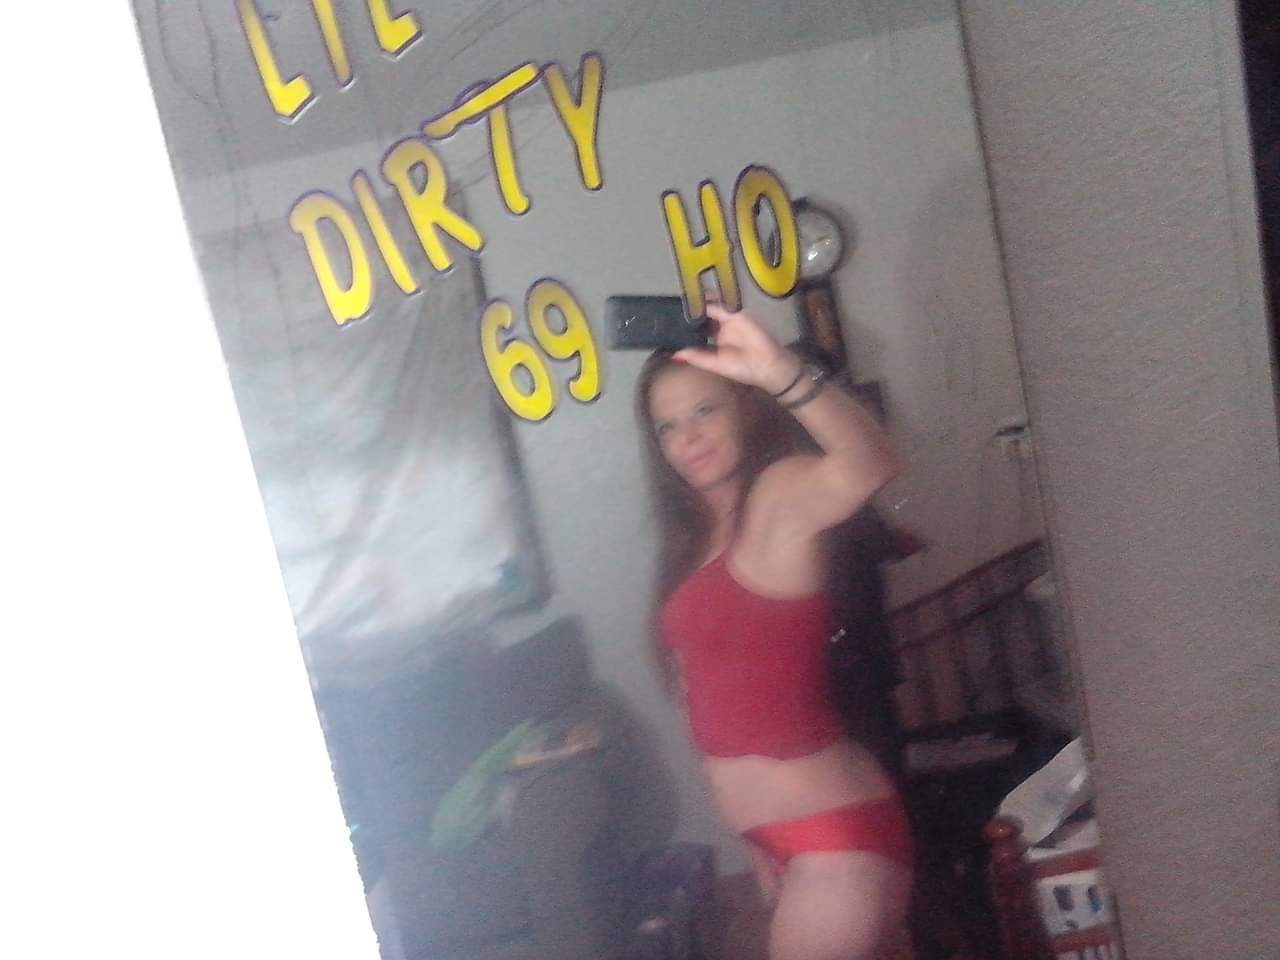 Dirty 69 hoe